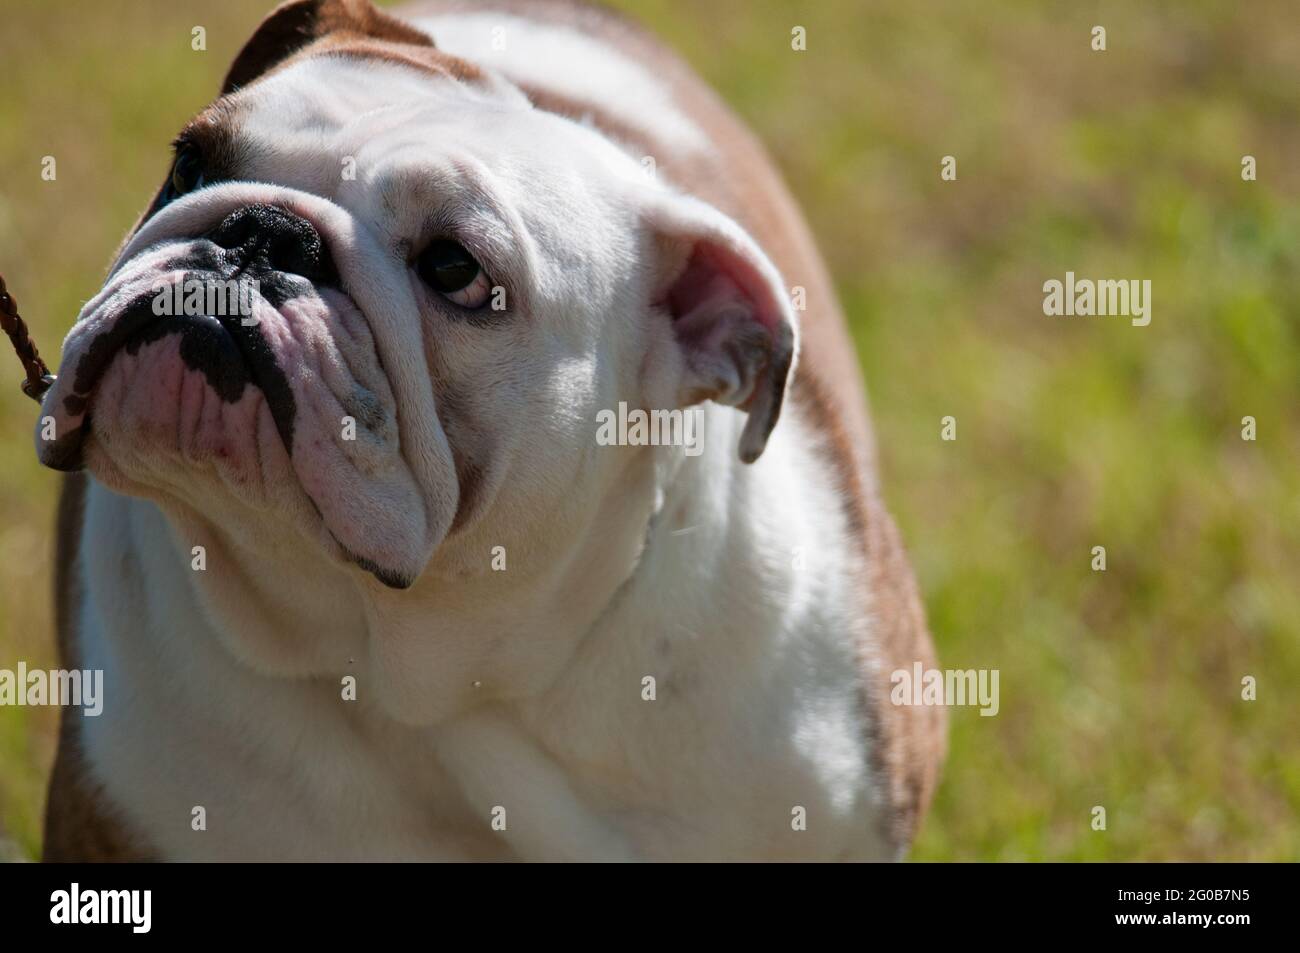 Bulldog face close up Stock Photo